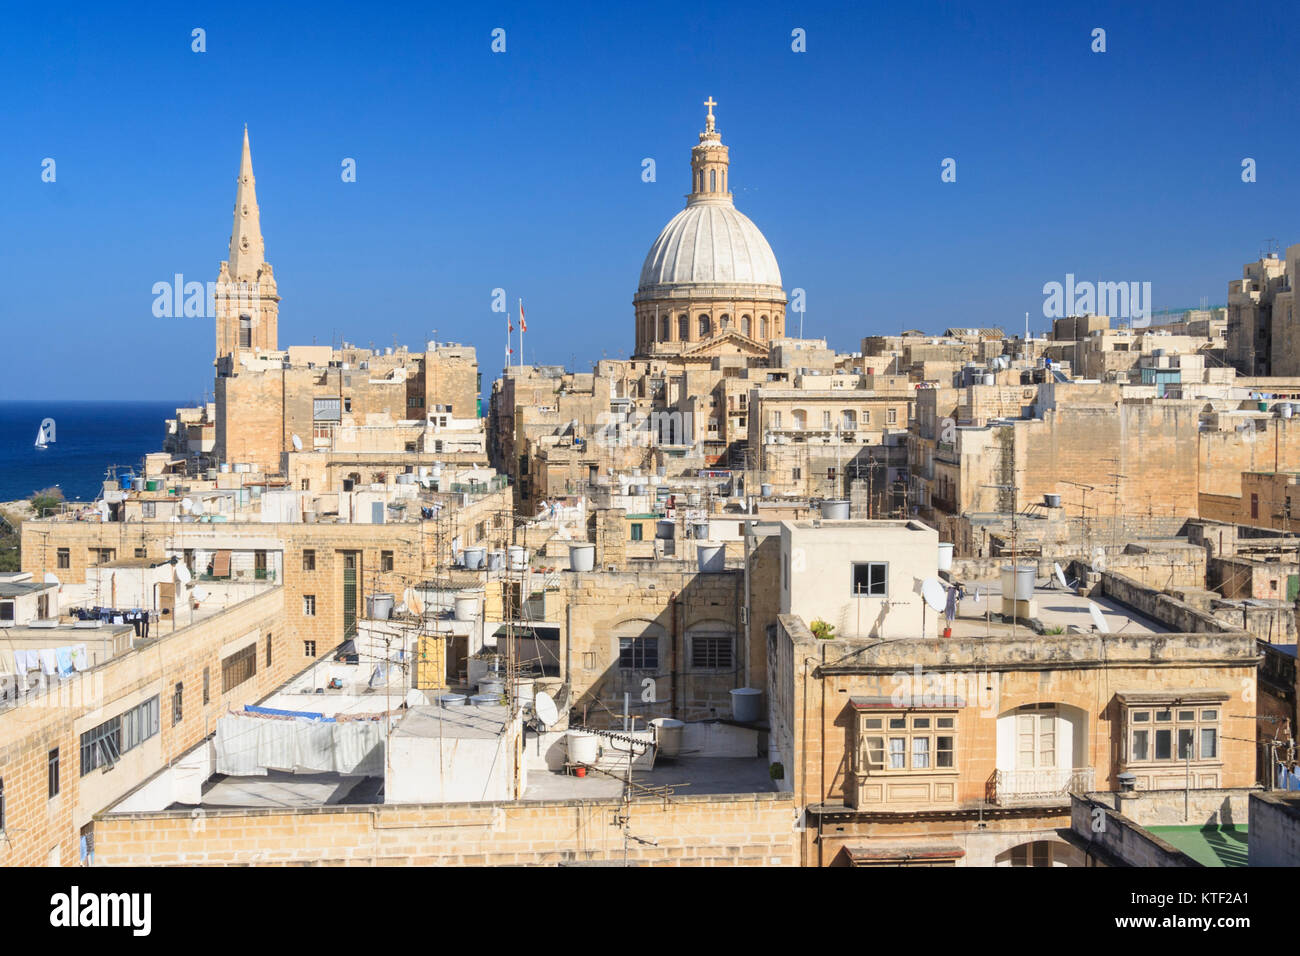 Overview of historic city of Valletta, Malta Stock Photo